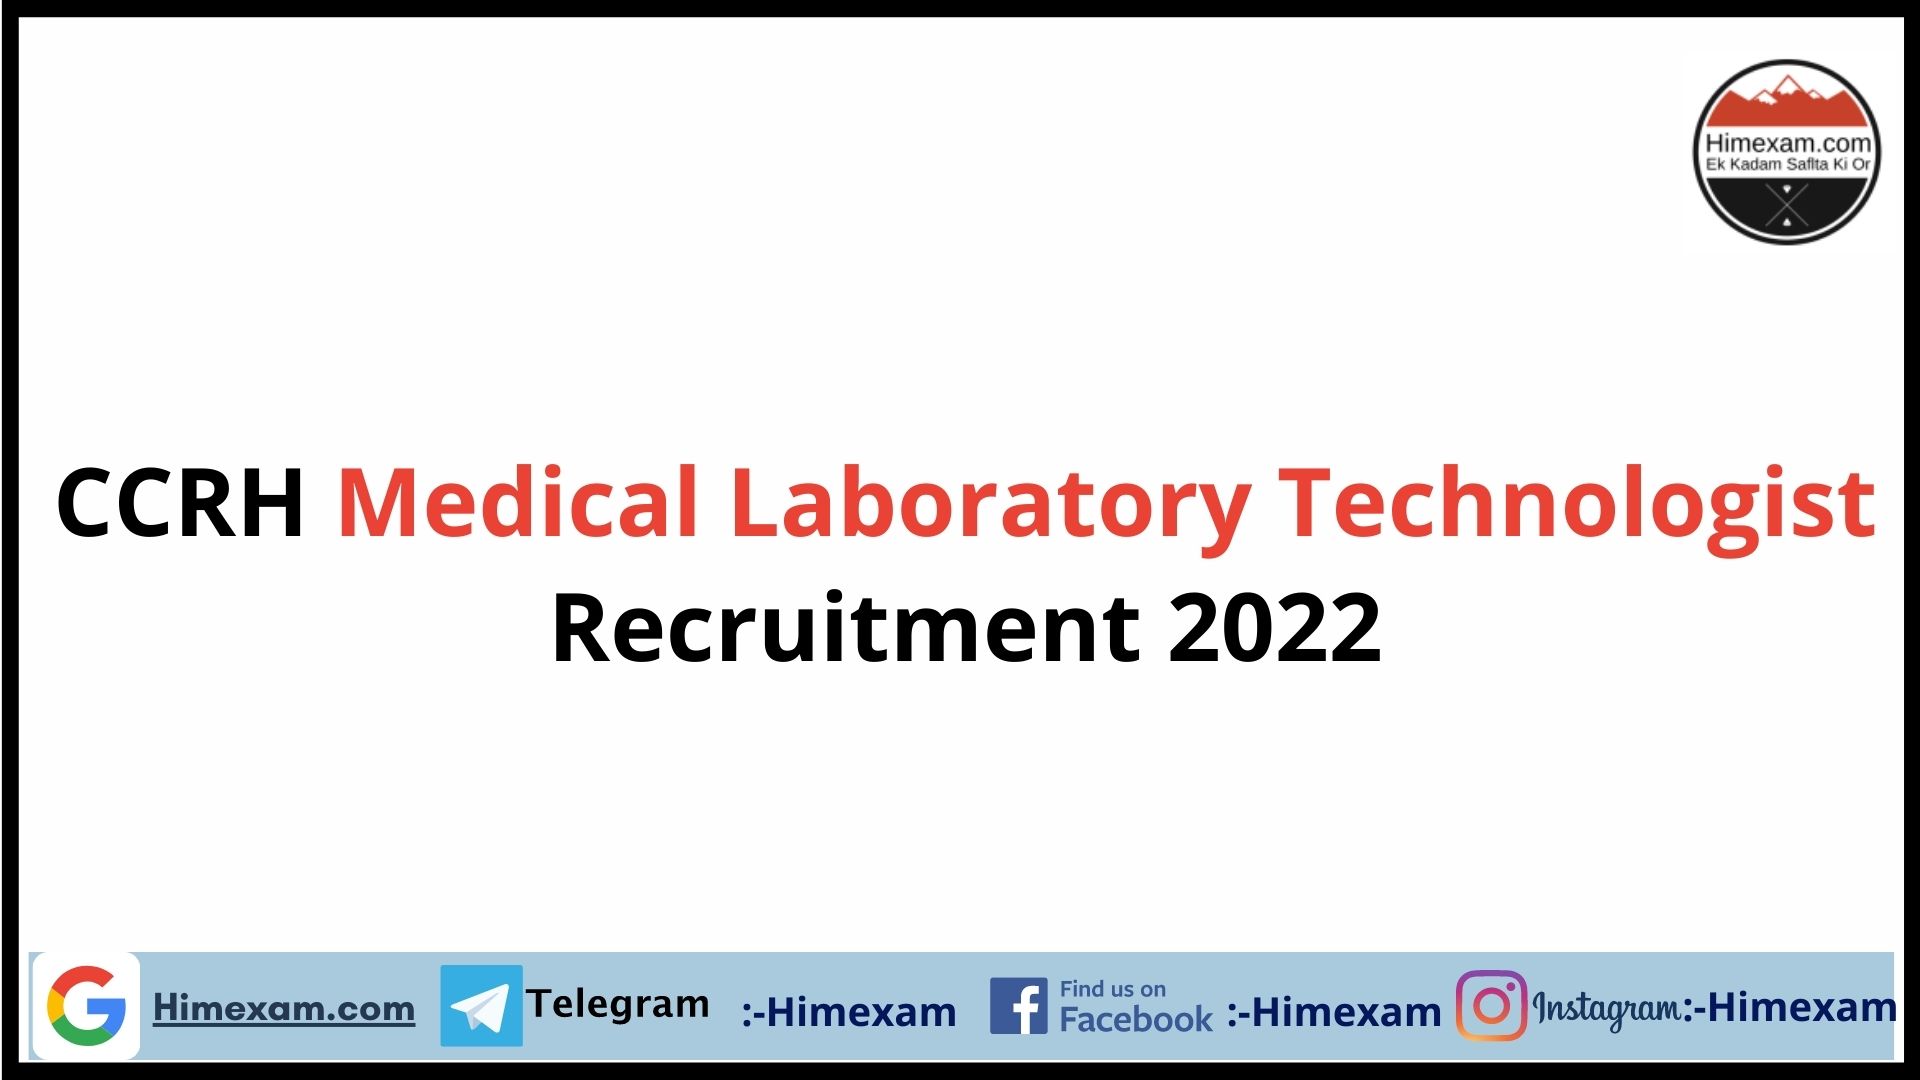 CCRH Medical Laboratory Technologist Recruitment 2022